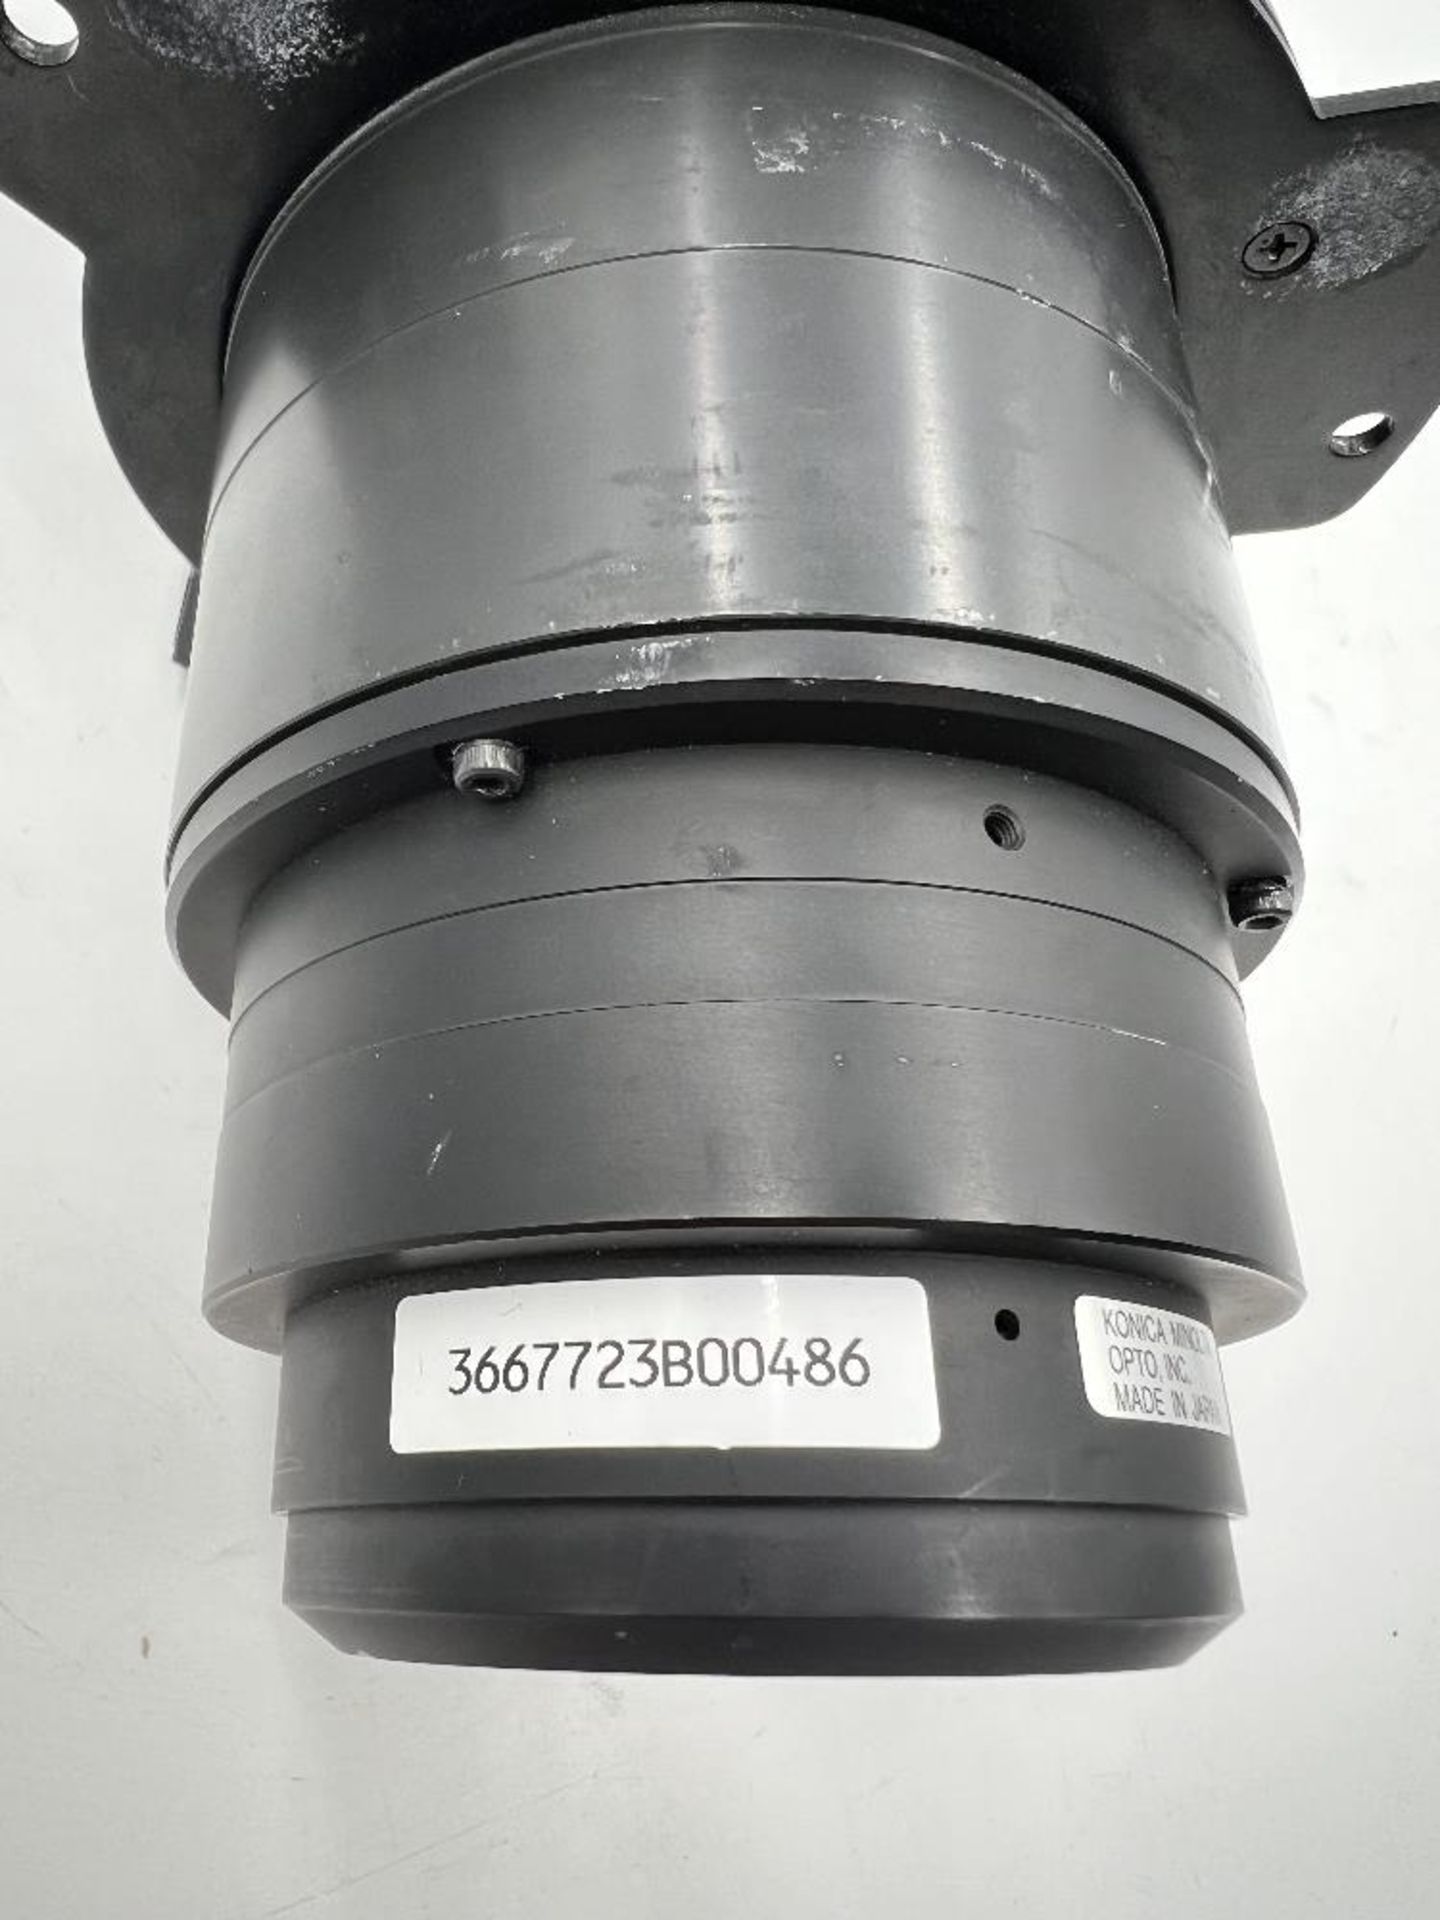 Christie ILS M-Series HD Lens 4.5-7.5 With Heavy Duty Peli Case - Image 6 of 8